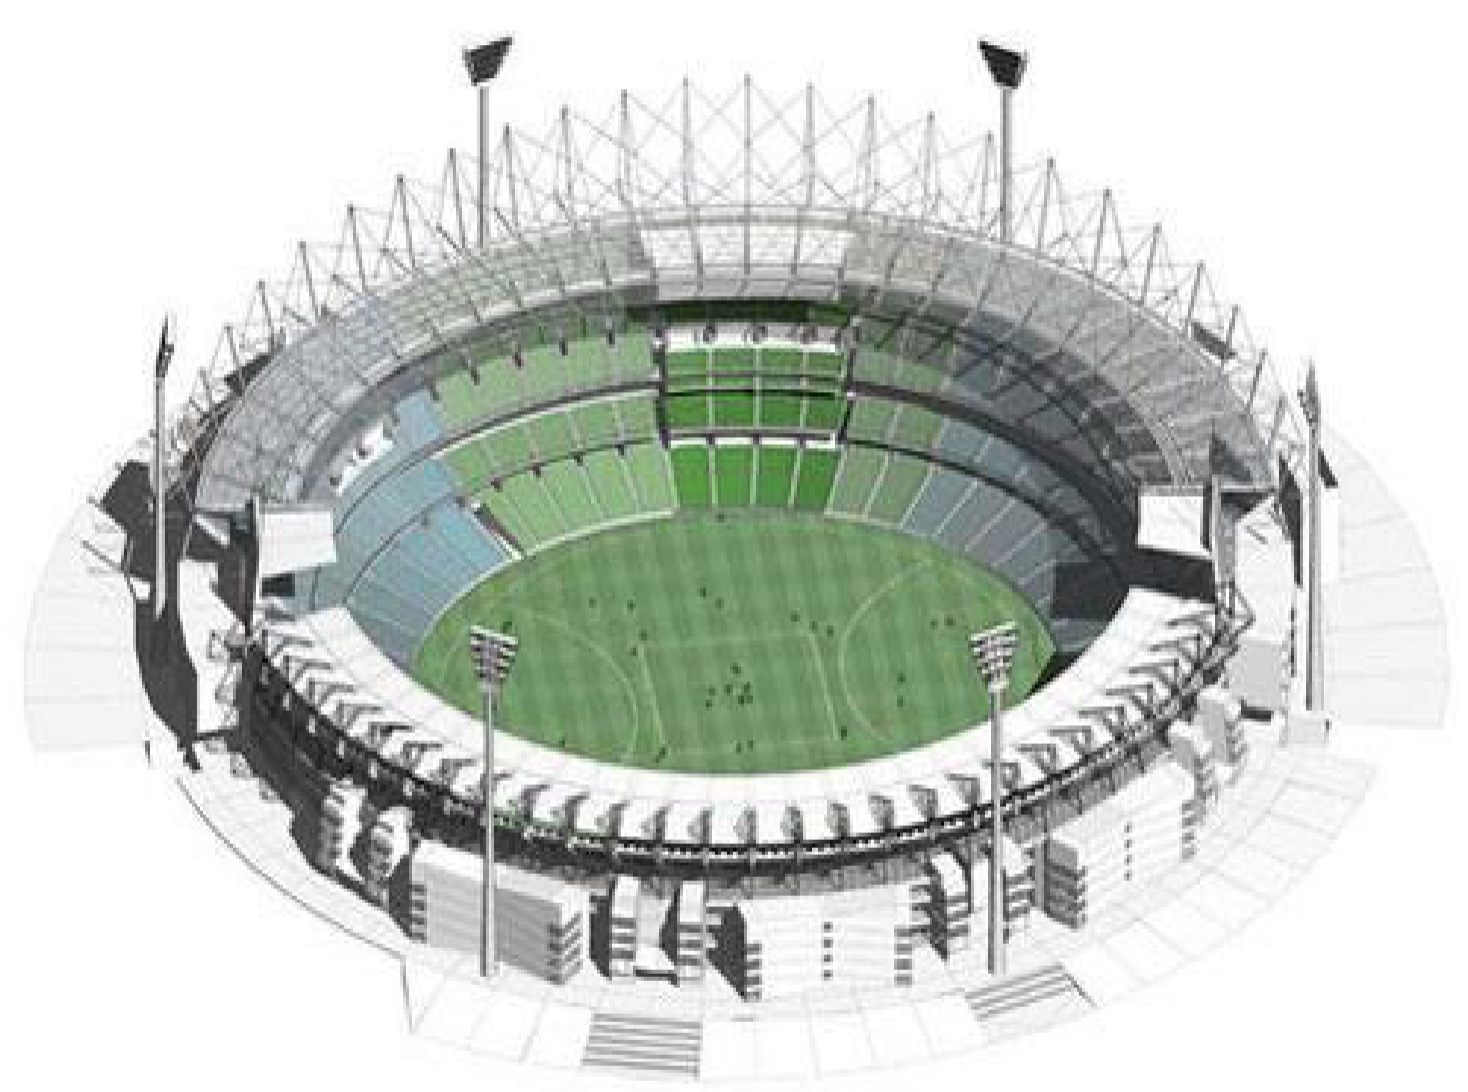 Modeling Stadium internal and external flows